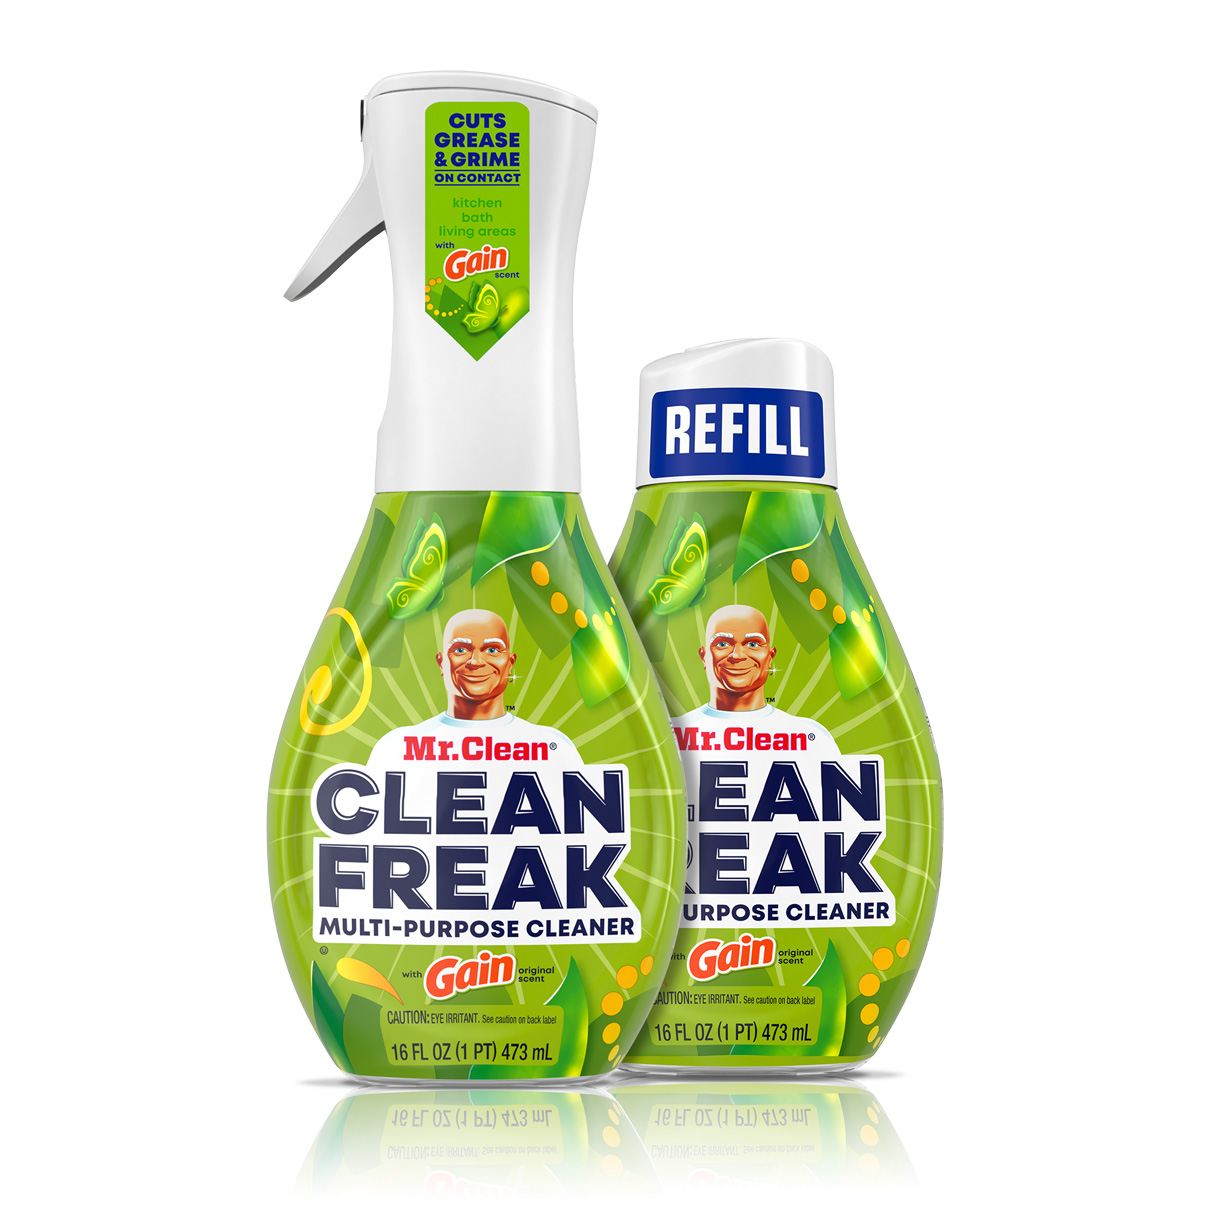 2) Mr. Clean Clean Freak Wild Flower Deep Cleaning Mist Refill, 16